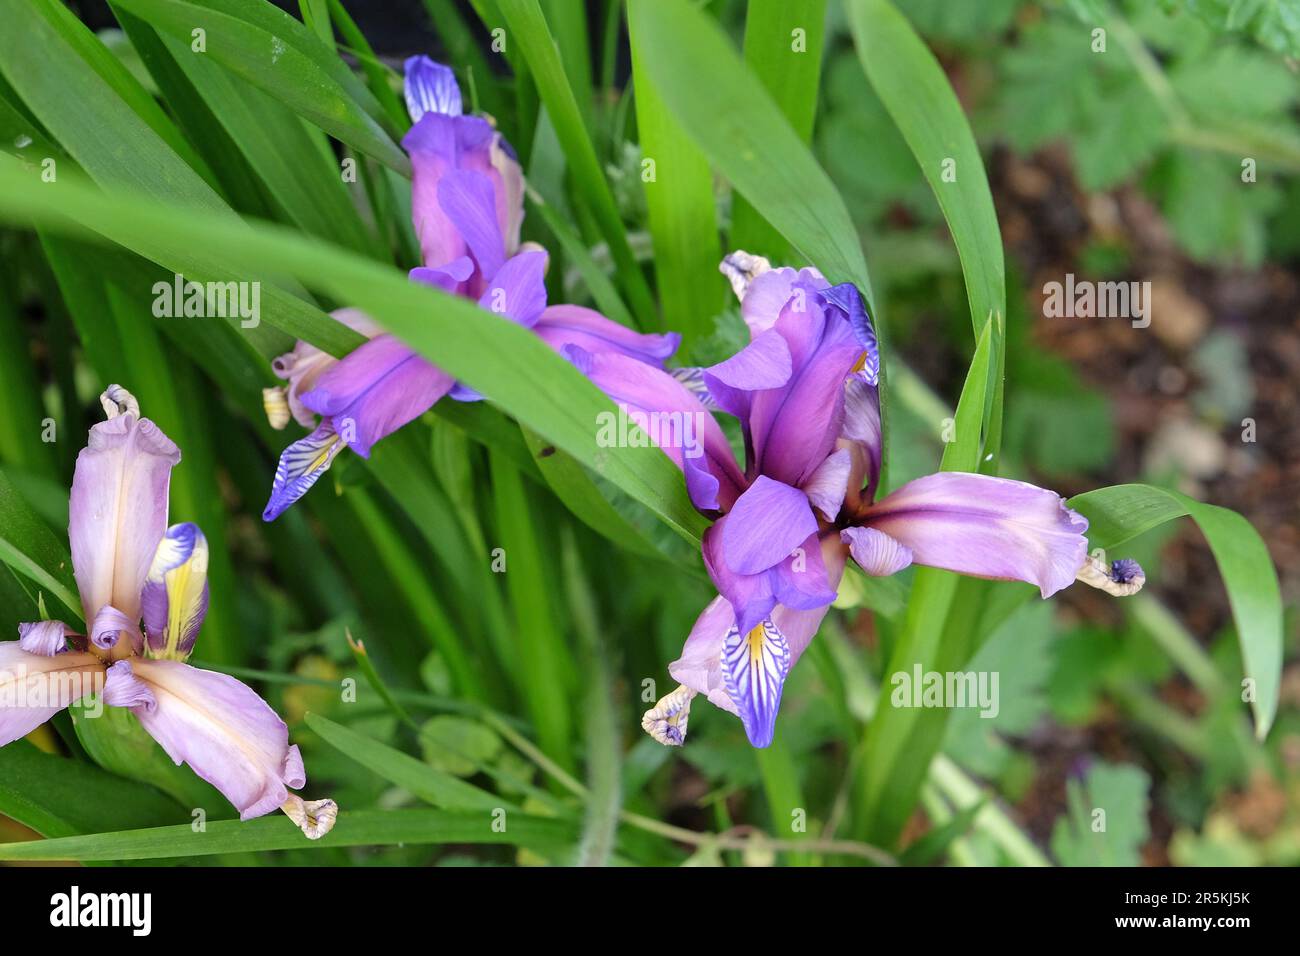 Grass leaved iris in flower. Stock Photo